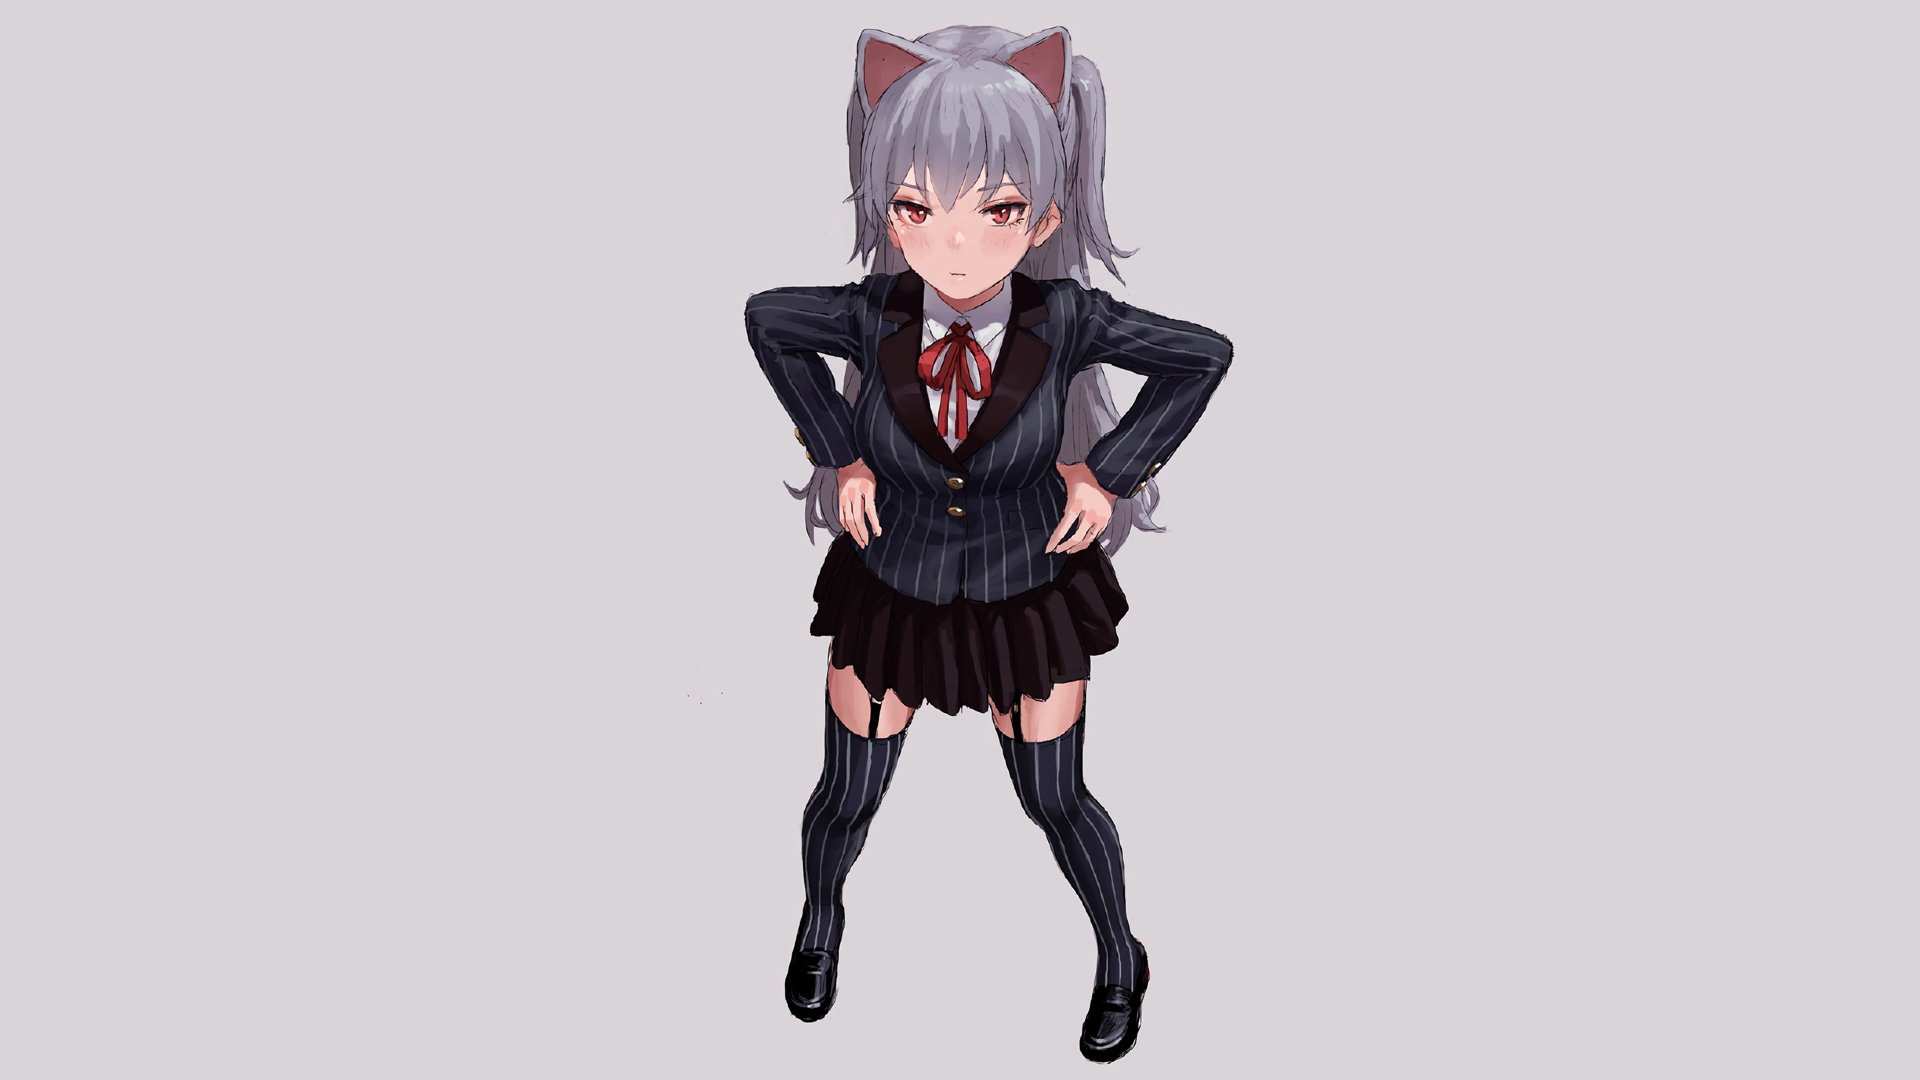 Anime 1920x1080 anime manga anime girls schoolgirl simple background cat girl silver hair gray hair stockings cat ears